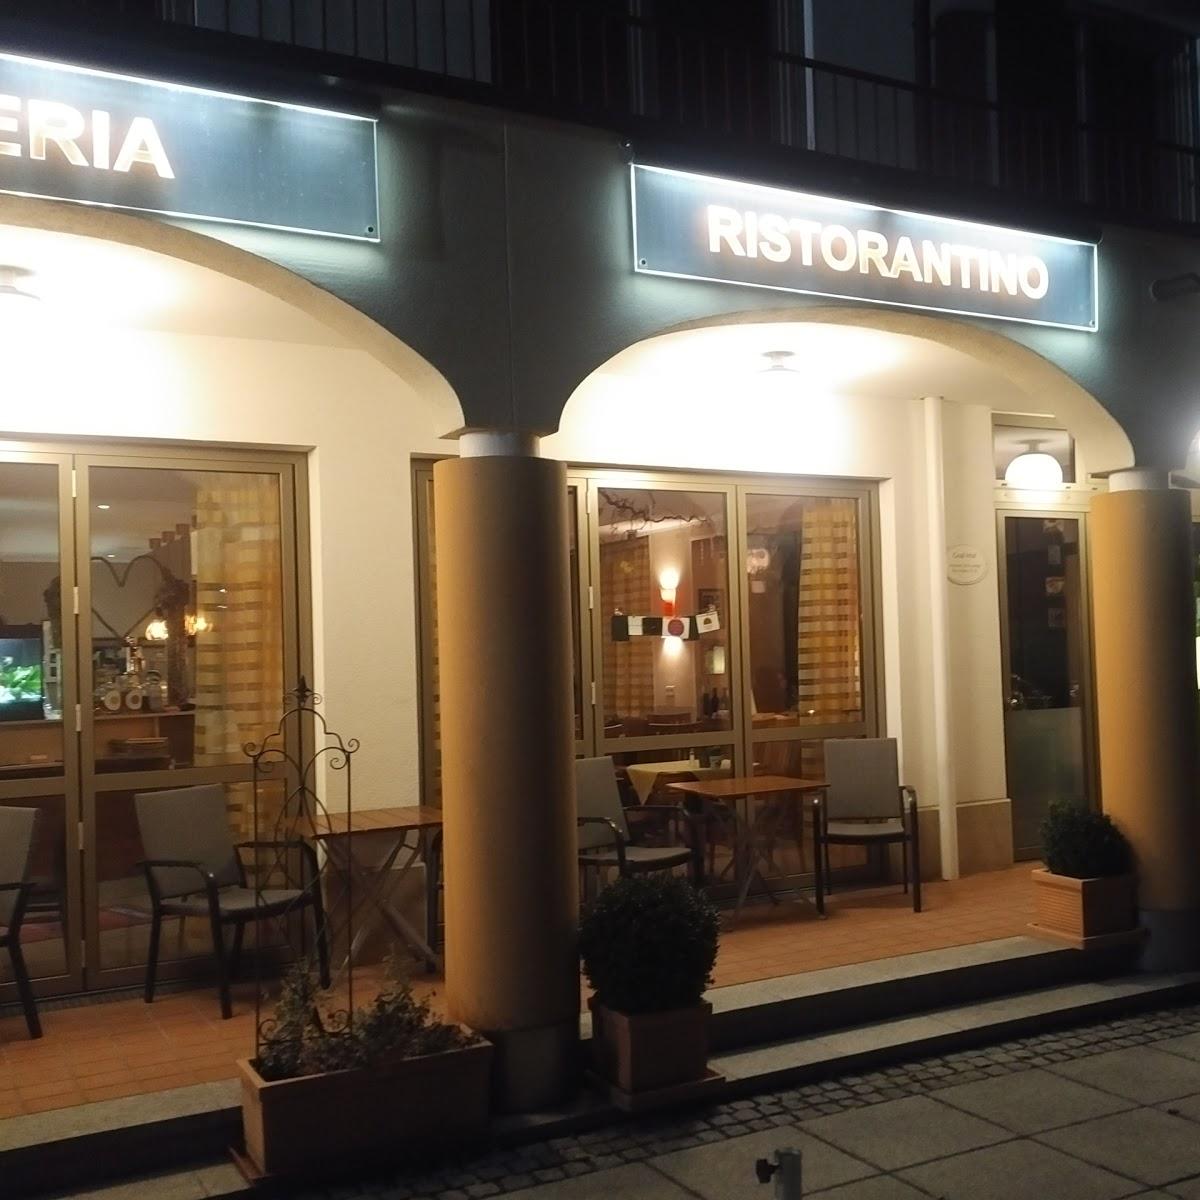 Restaurant "Noi ridiamo Ristorantino" in  Neuried